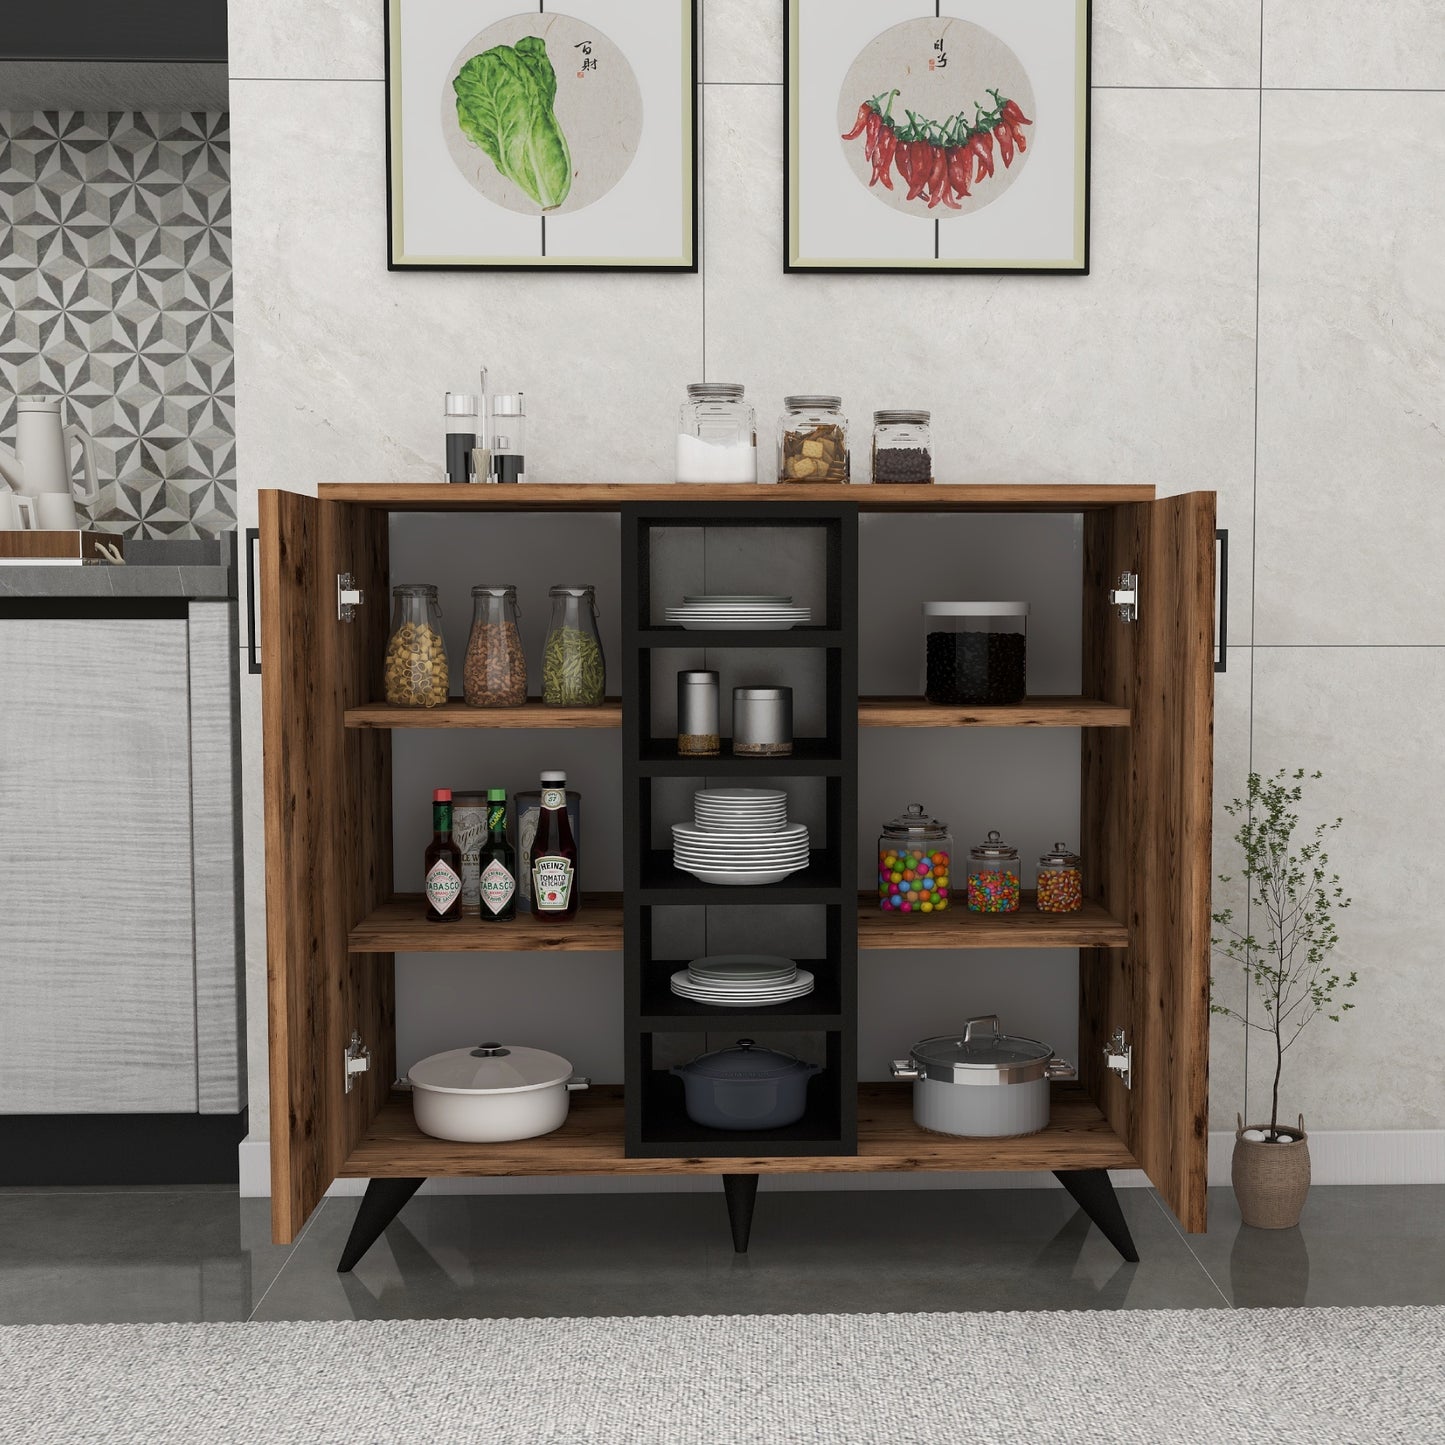 Leander Kitchen Cabinet with Shelves